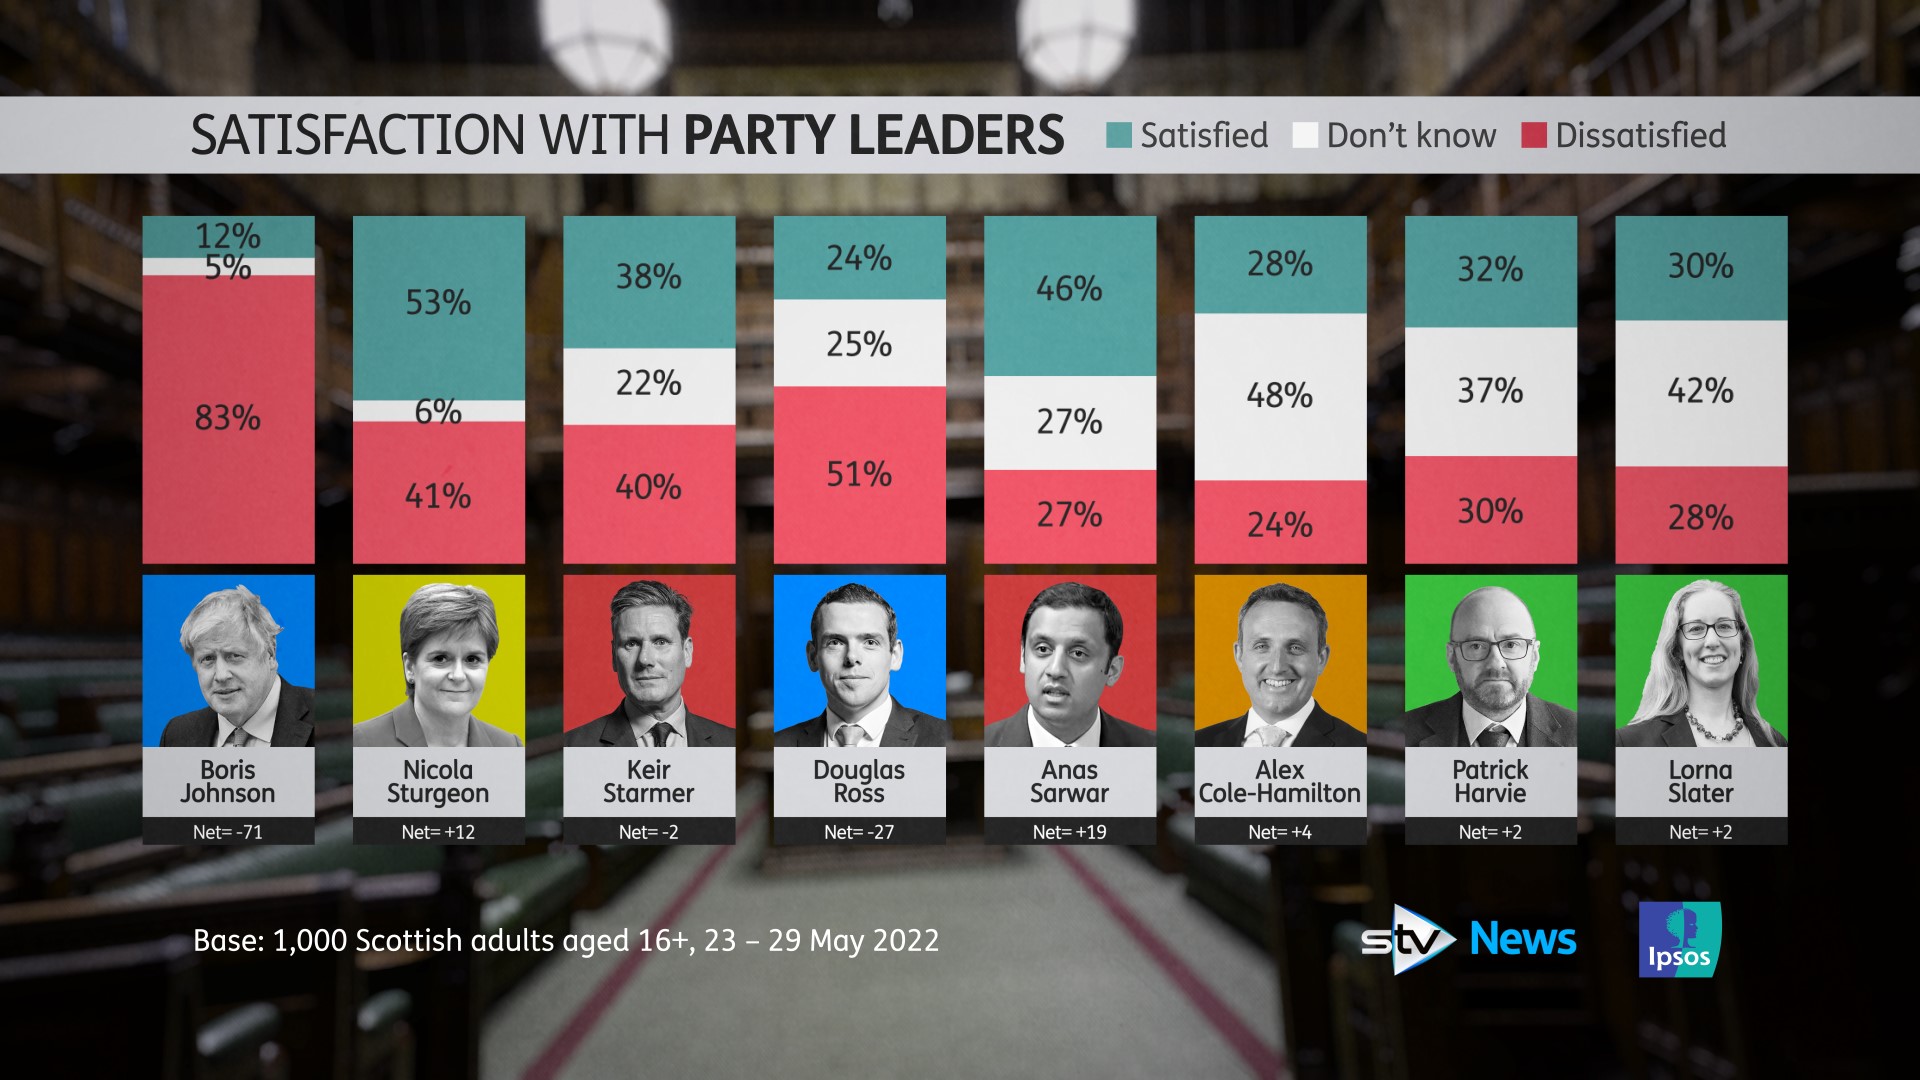 Boris Johnson has proved unpopular among Scots.